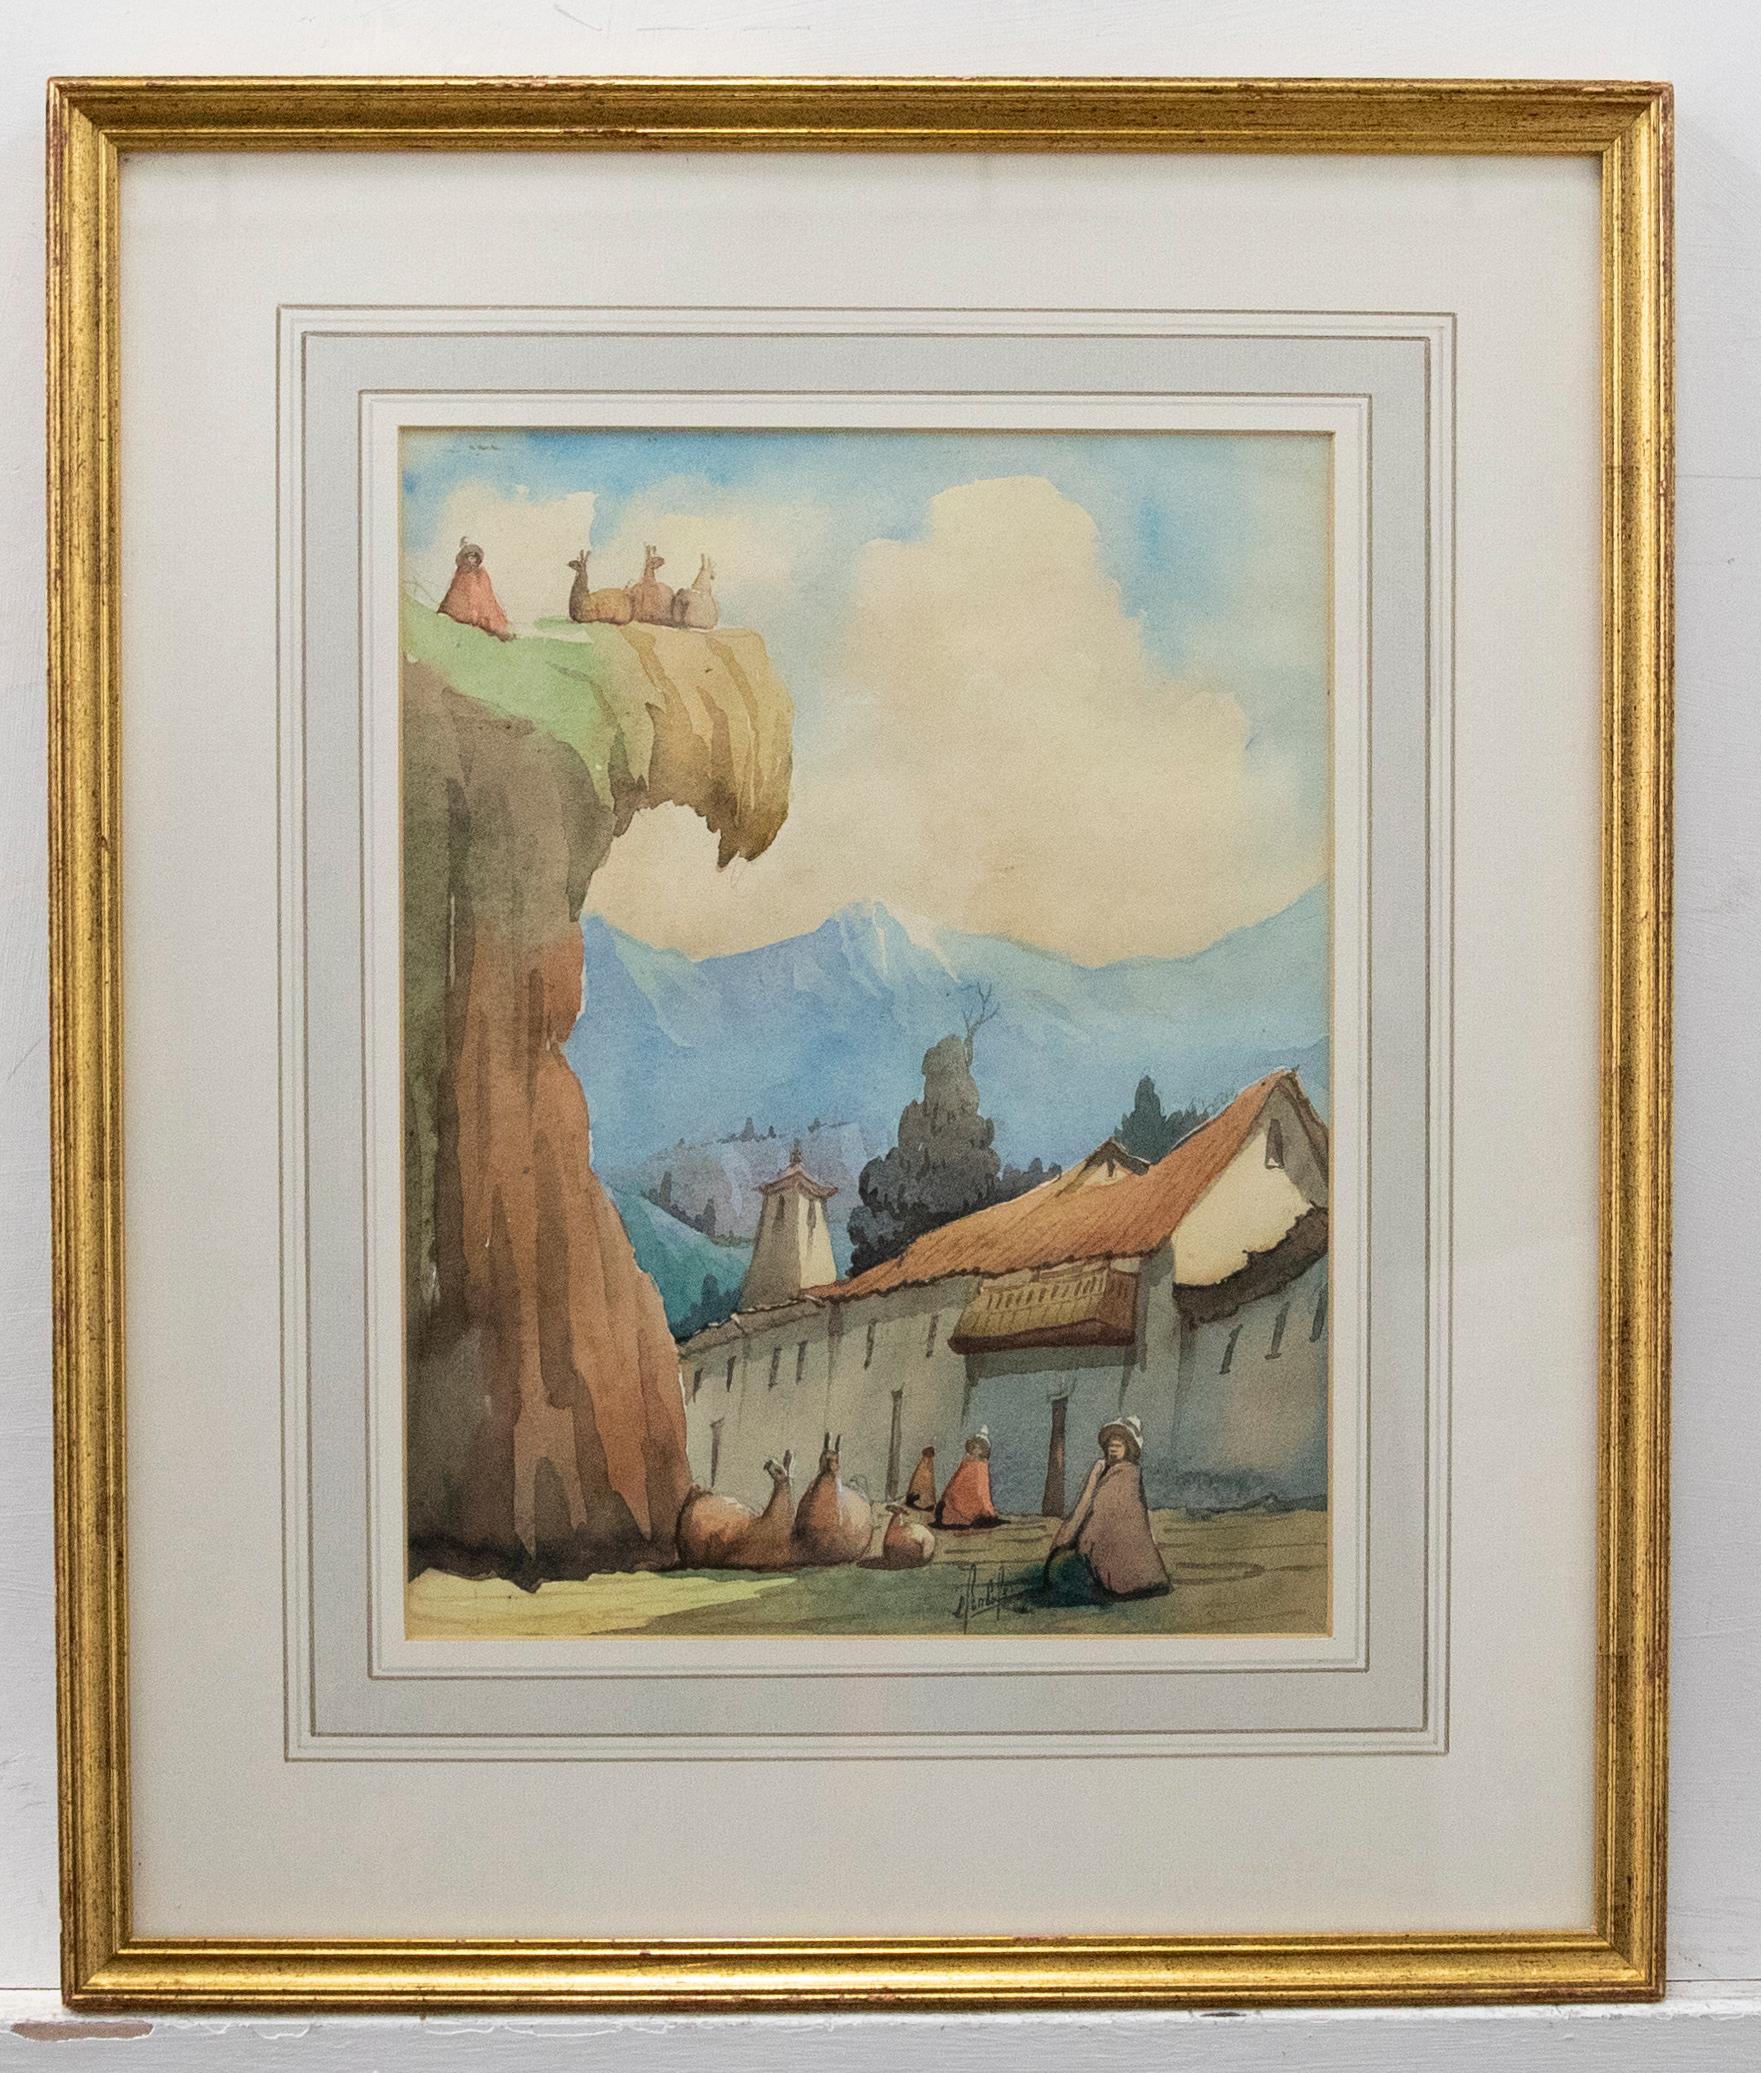 Unknown Landscape Art - 1985 Watercolour - Llama on the Cliffside